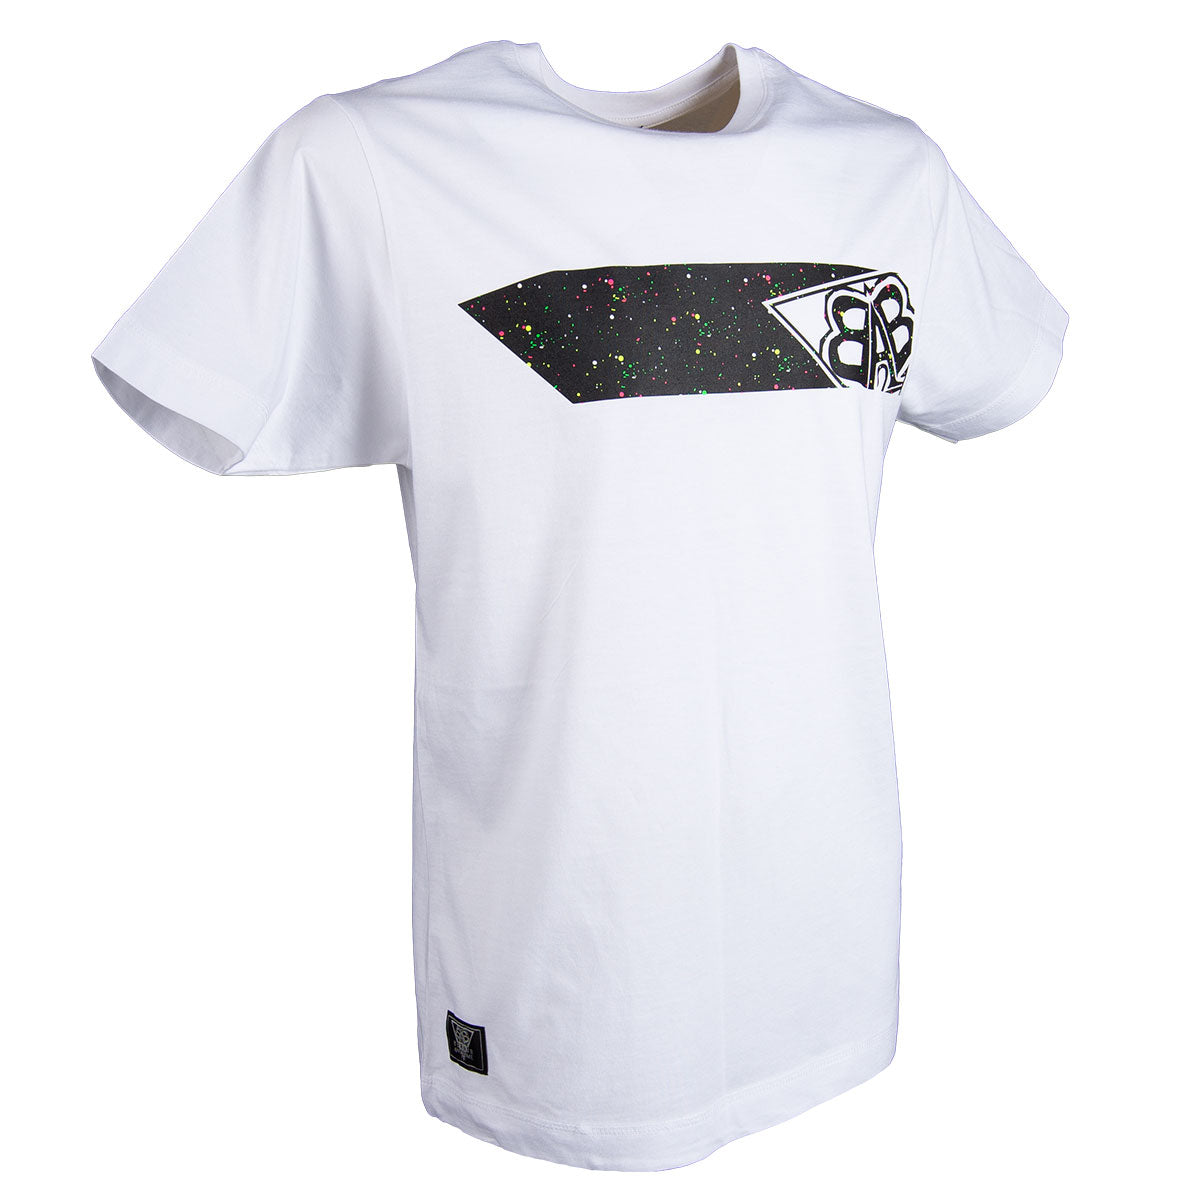 Colgalactic T-Shirt - B2BA Clothing